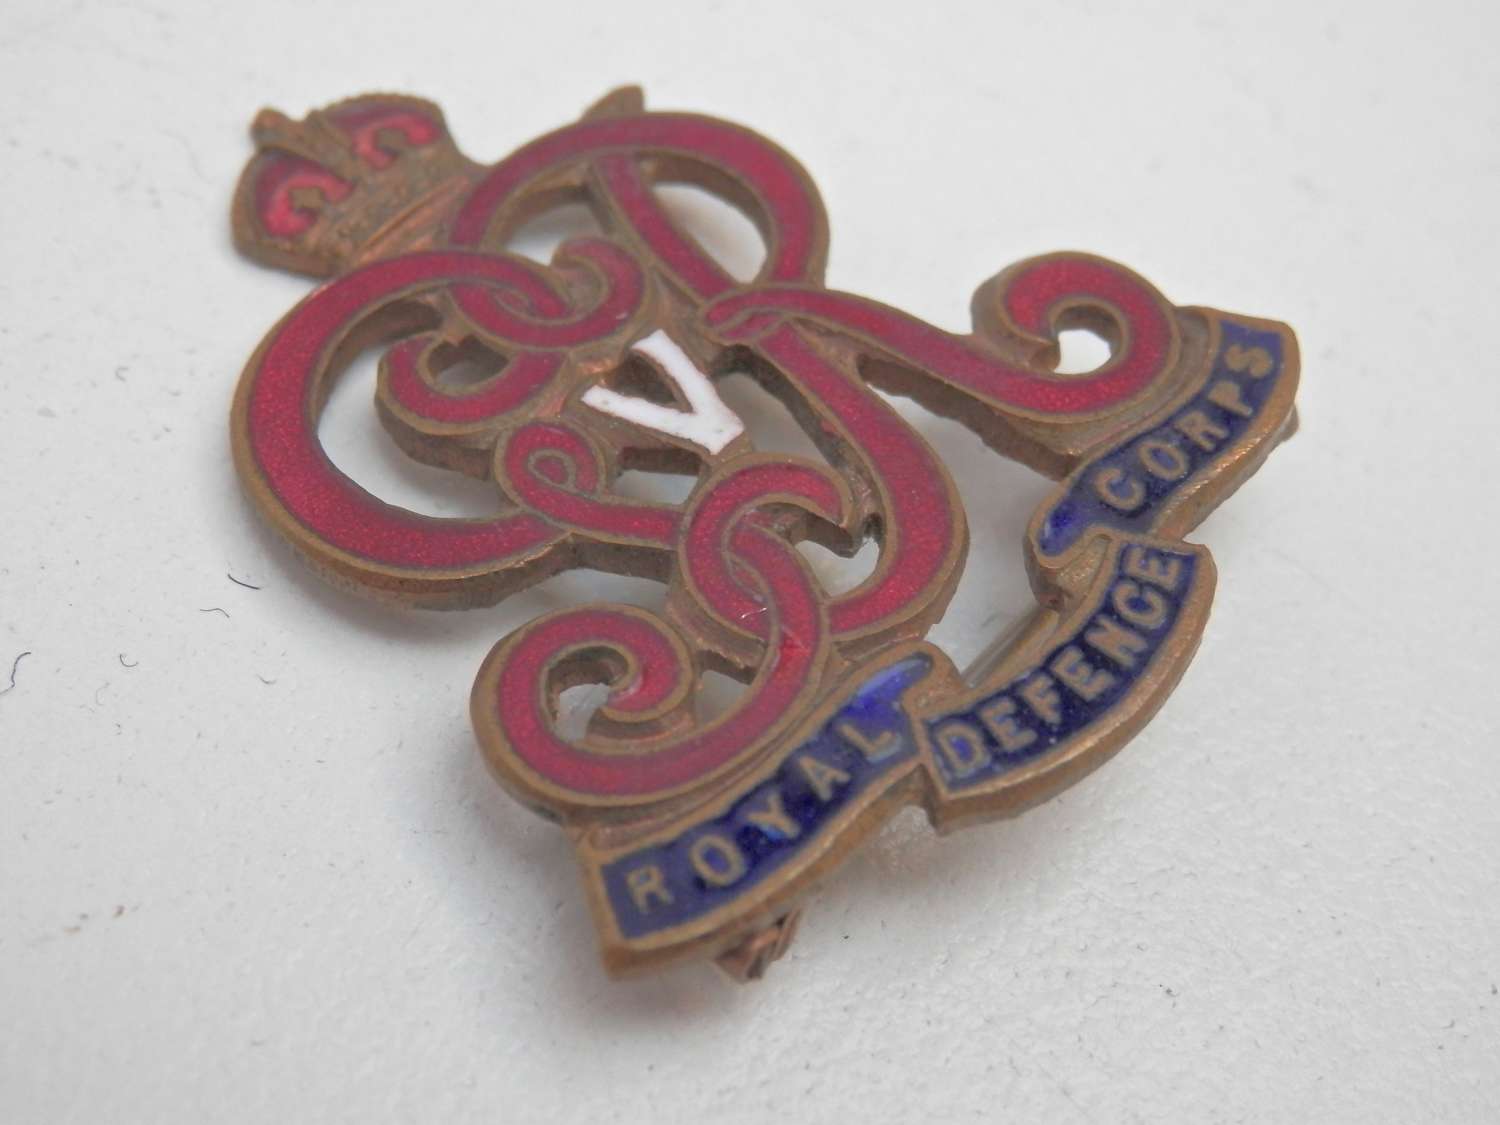 Royal defence corps cap badge